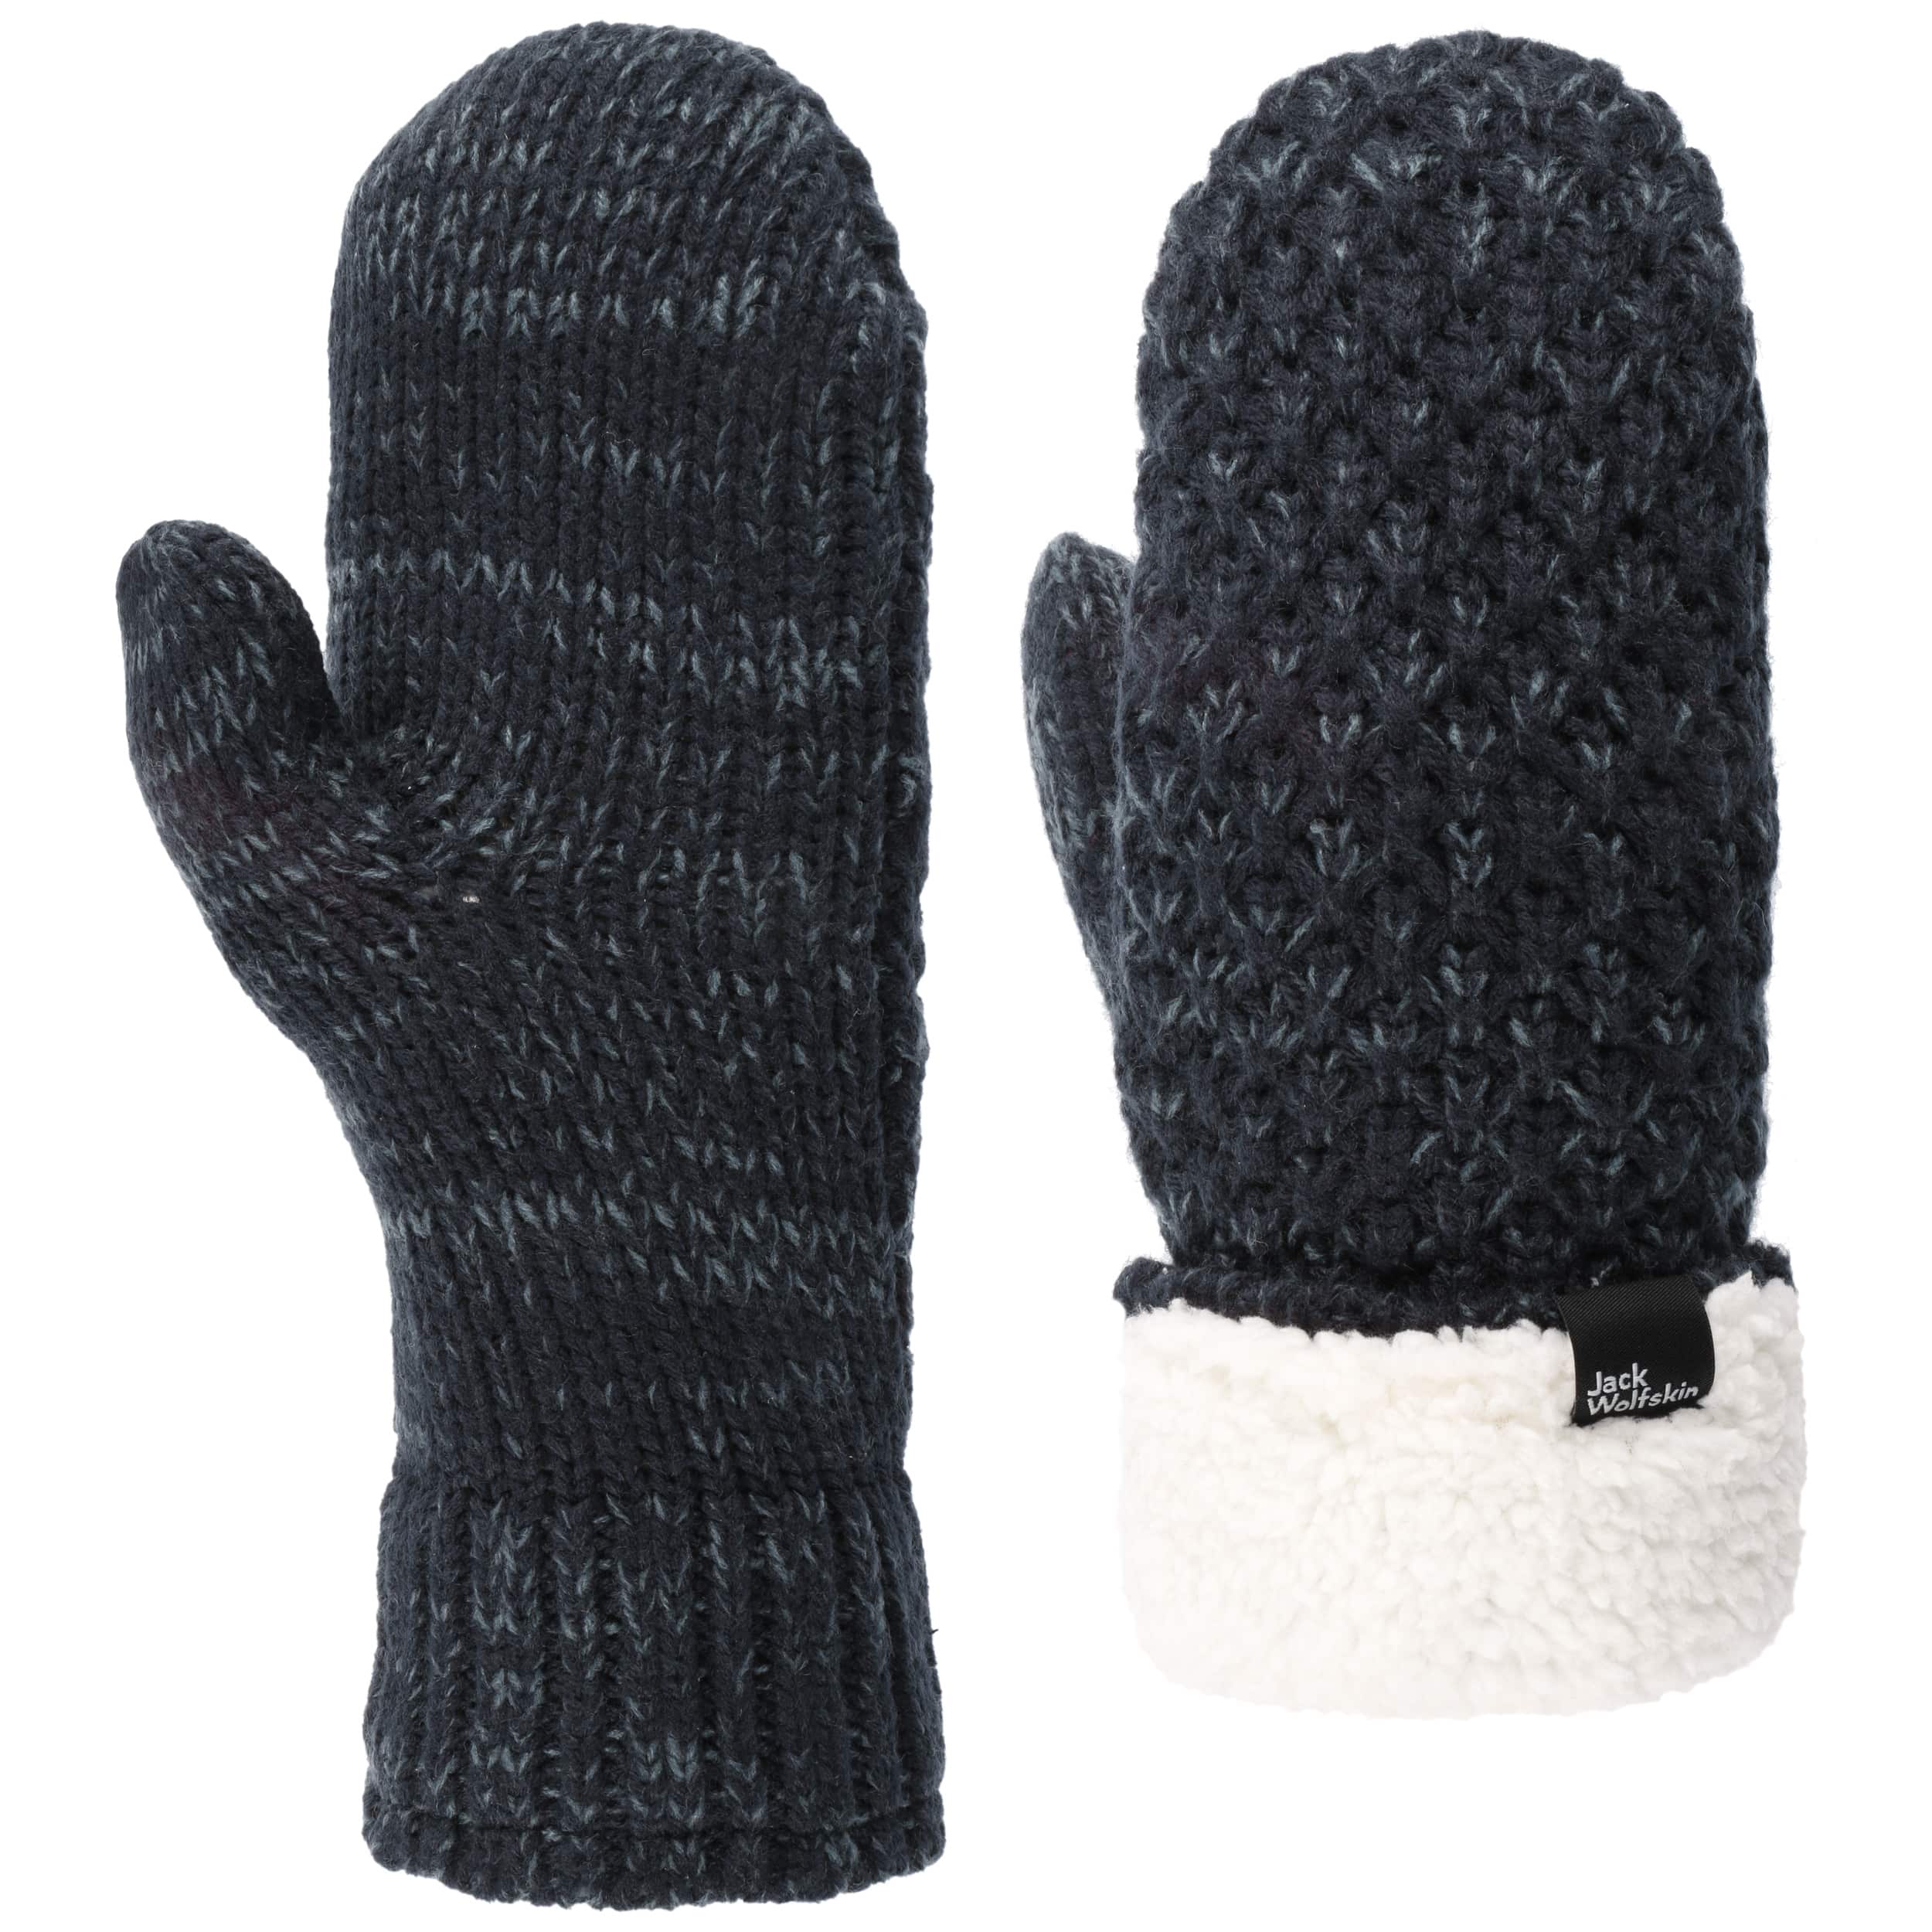 Highloft Beanies Knit Hats, online Caps Wolfskin Mittens --> Jack ▷ Shop by & Hatshopping